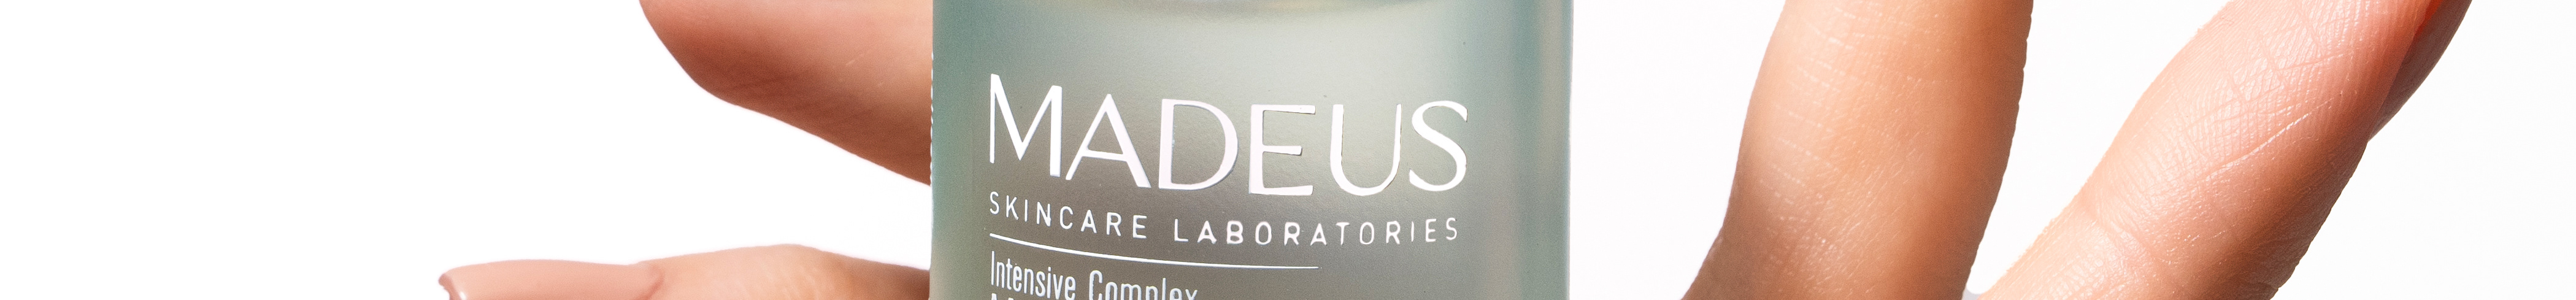 Profielbanner van Madeus Skincare Laboratories